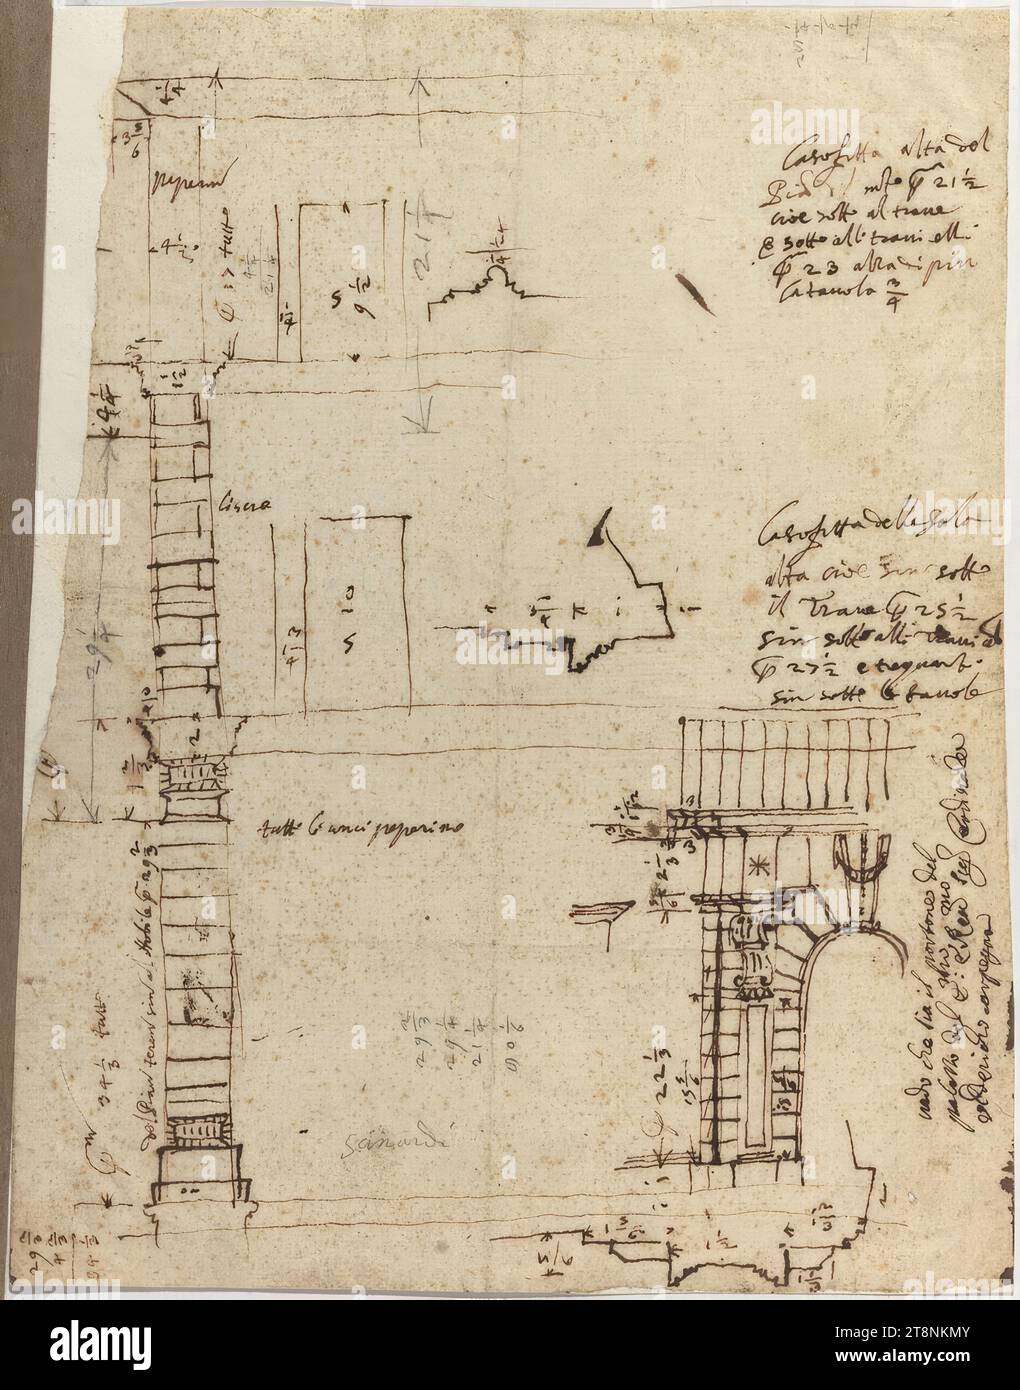 Rom, Palazzo Carpegna, Fassadenaufnahme (Palazzo Vaini), 1638, Architekturzeichnung, Papier, fein; Federzeichnung; Entwurfsskizzen und Beschriftung mit Feder in Braun, Kotierung auch in Graphit, 26 x 20,3 cm, u. (Graphit): 'scinardi'; r.o. 'the high attic of the, floor of the m p.mi 21 1/2, that is, under the beam, and under the partitions, p. 23 higher, the table 3/4'; darunter: 'the attic of the room, high i.e. up to the bottom, the beam p. 25 1/2'; 'sin sotto alli travi al (ta), p. 27 1/2 and three quarters Stock Photo